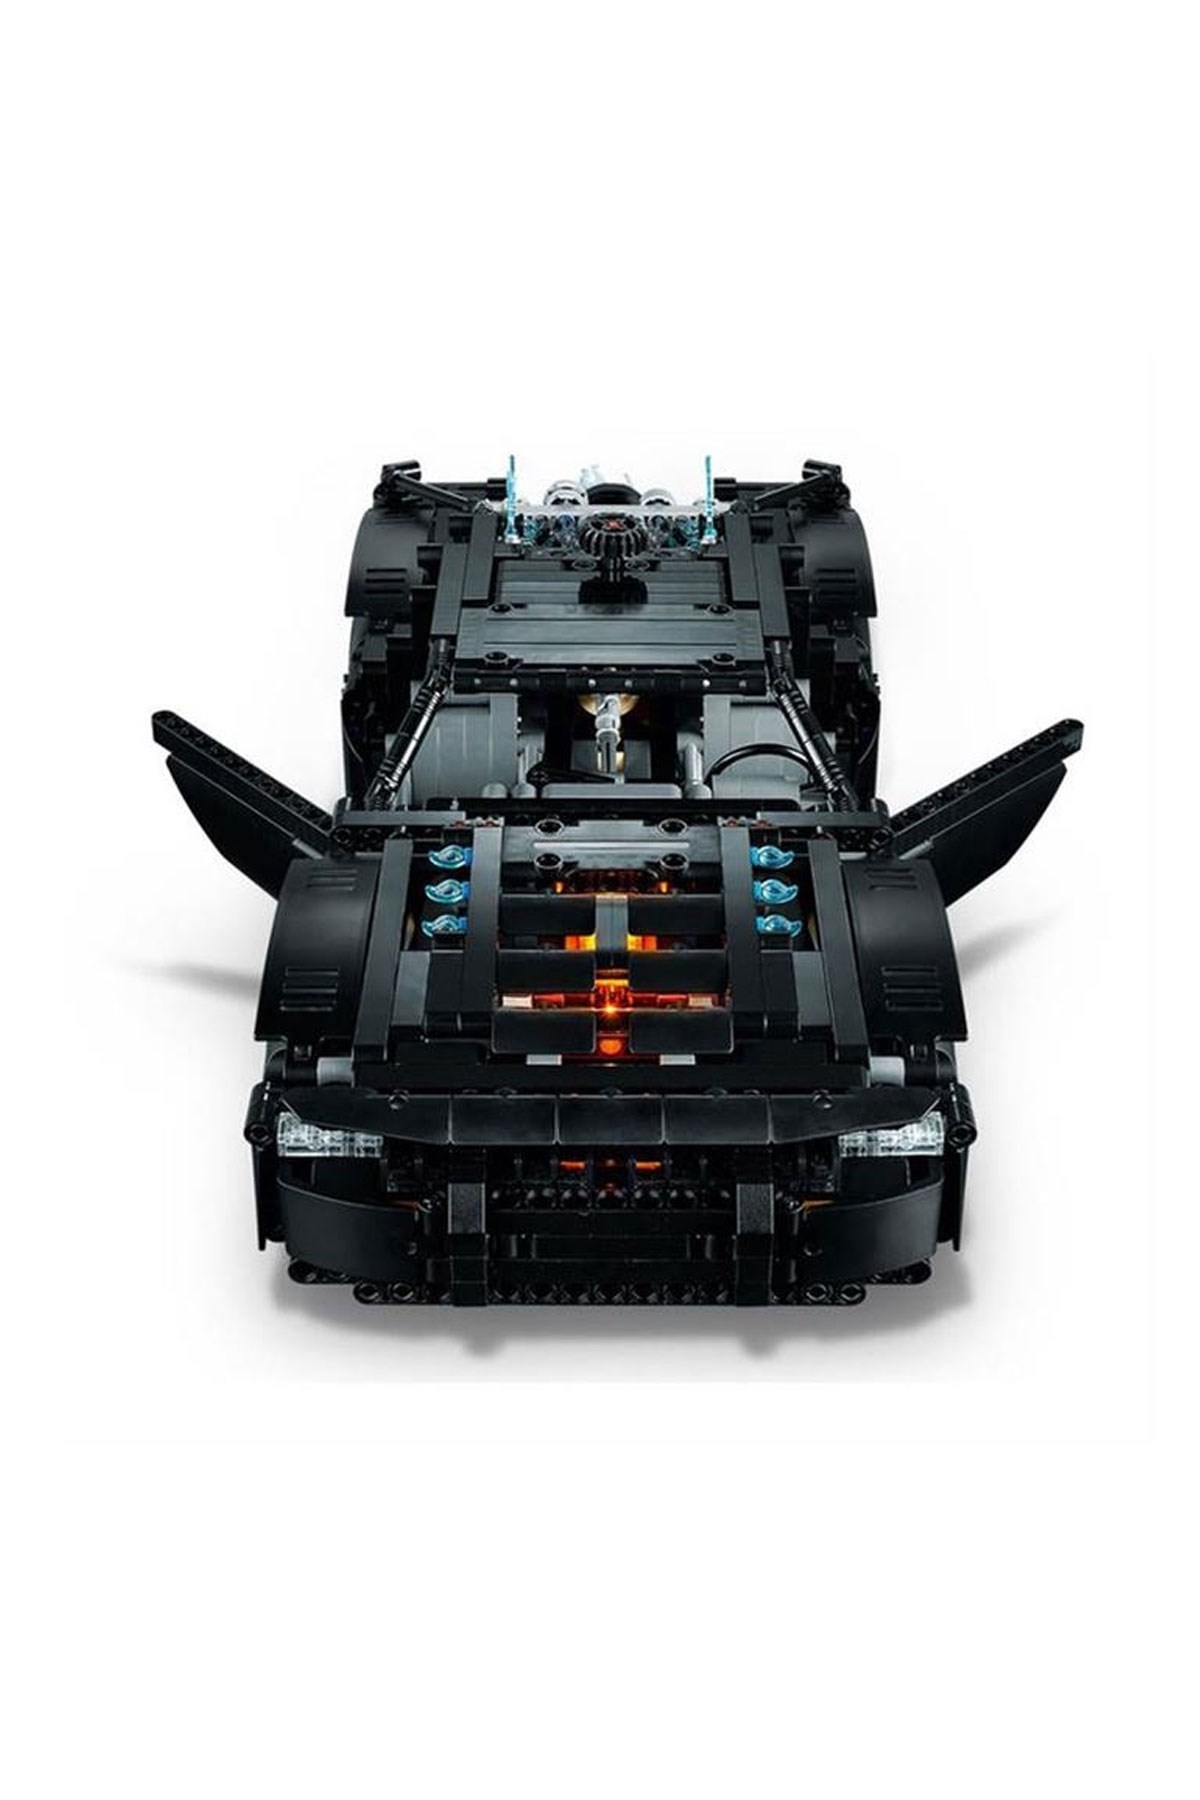 Lego Technic Batman Batmobile